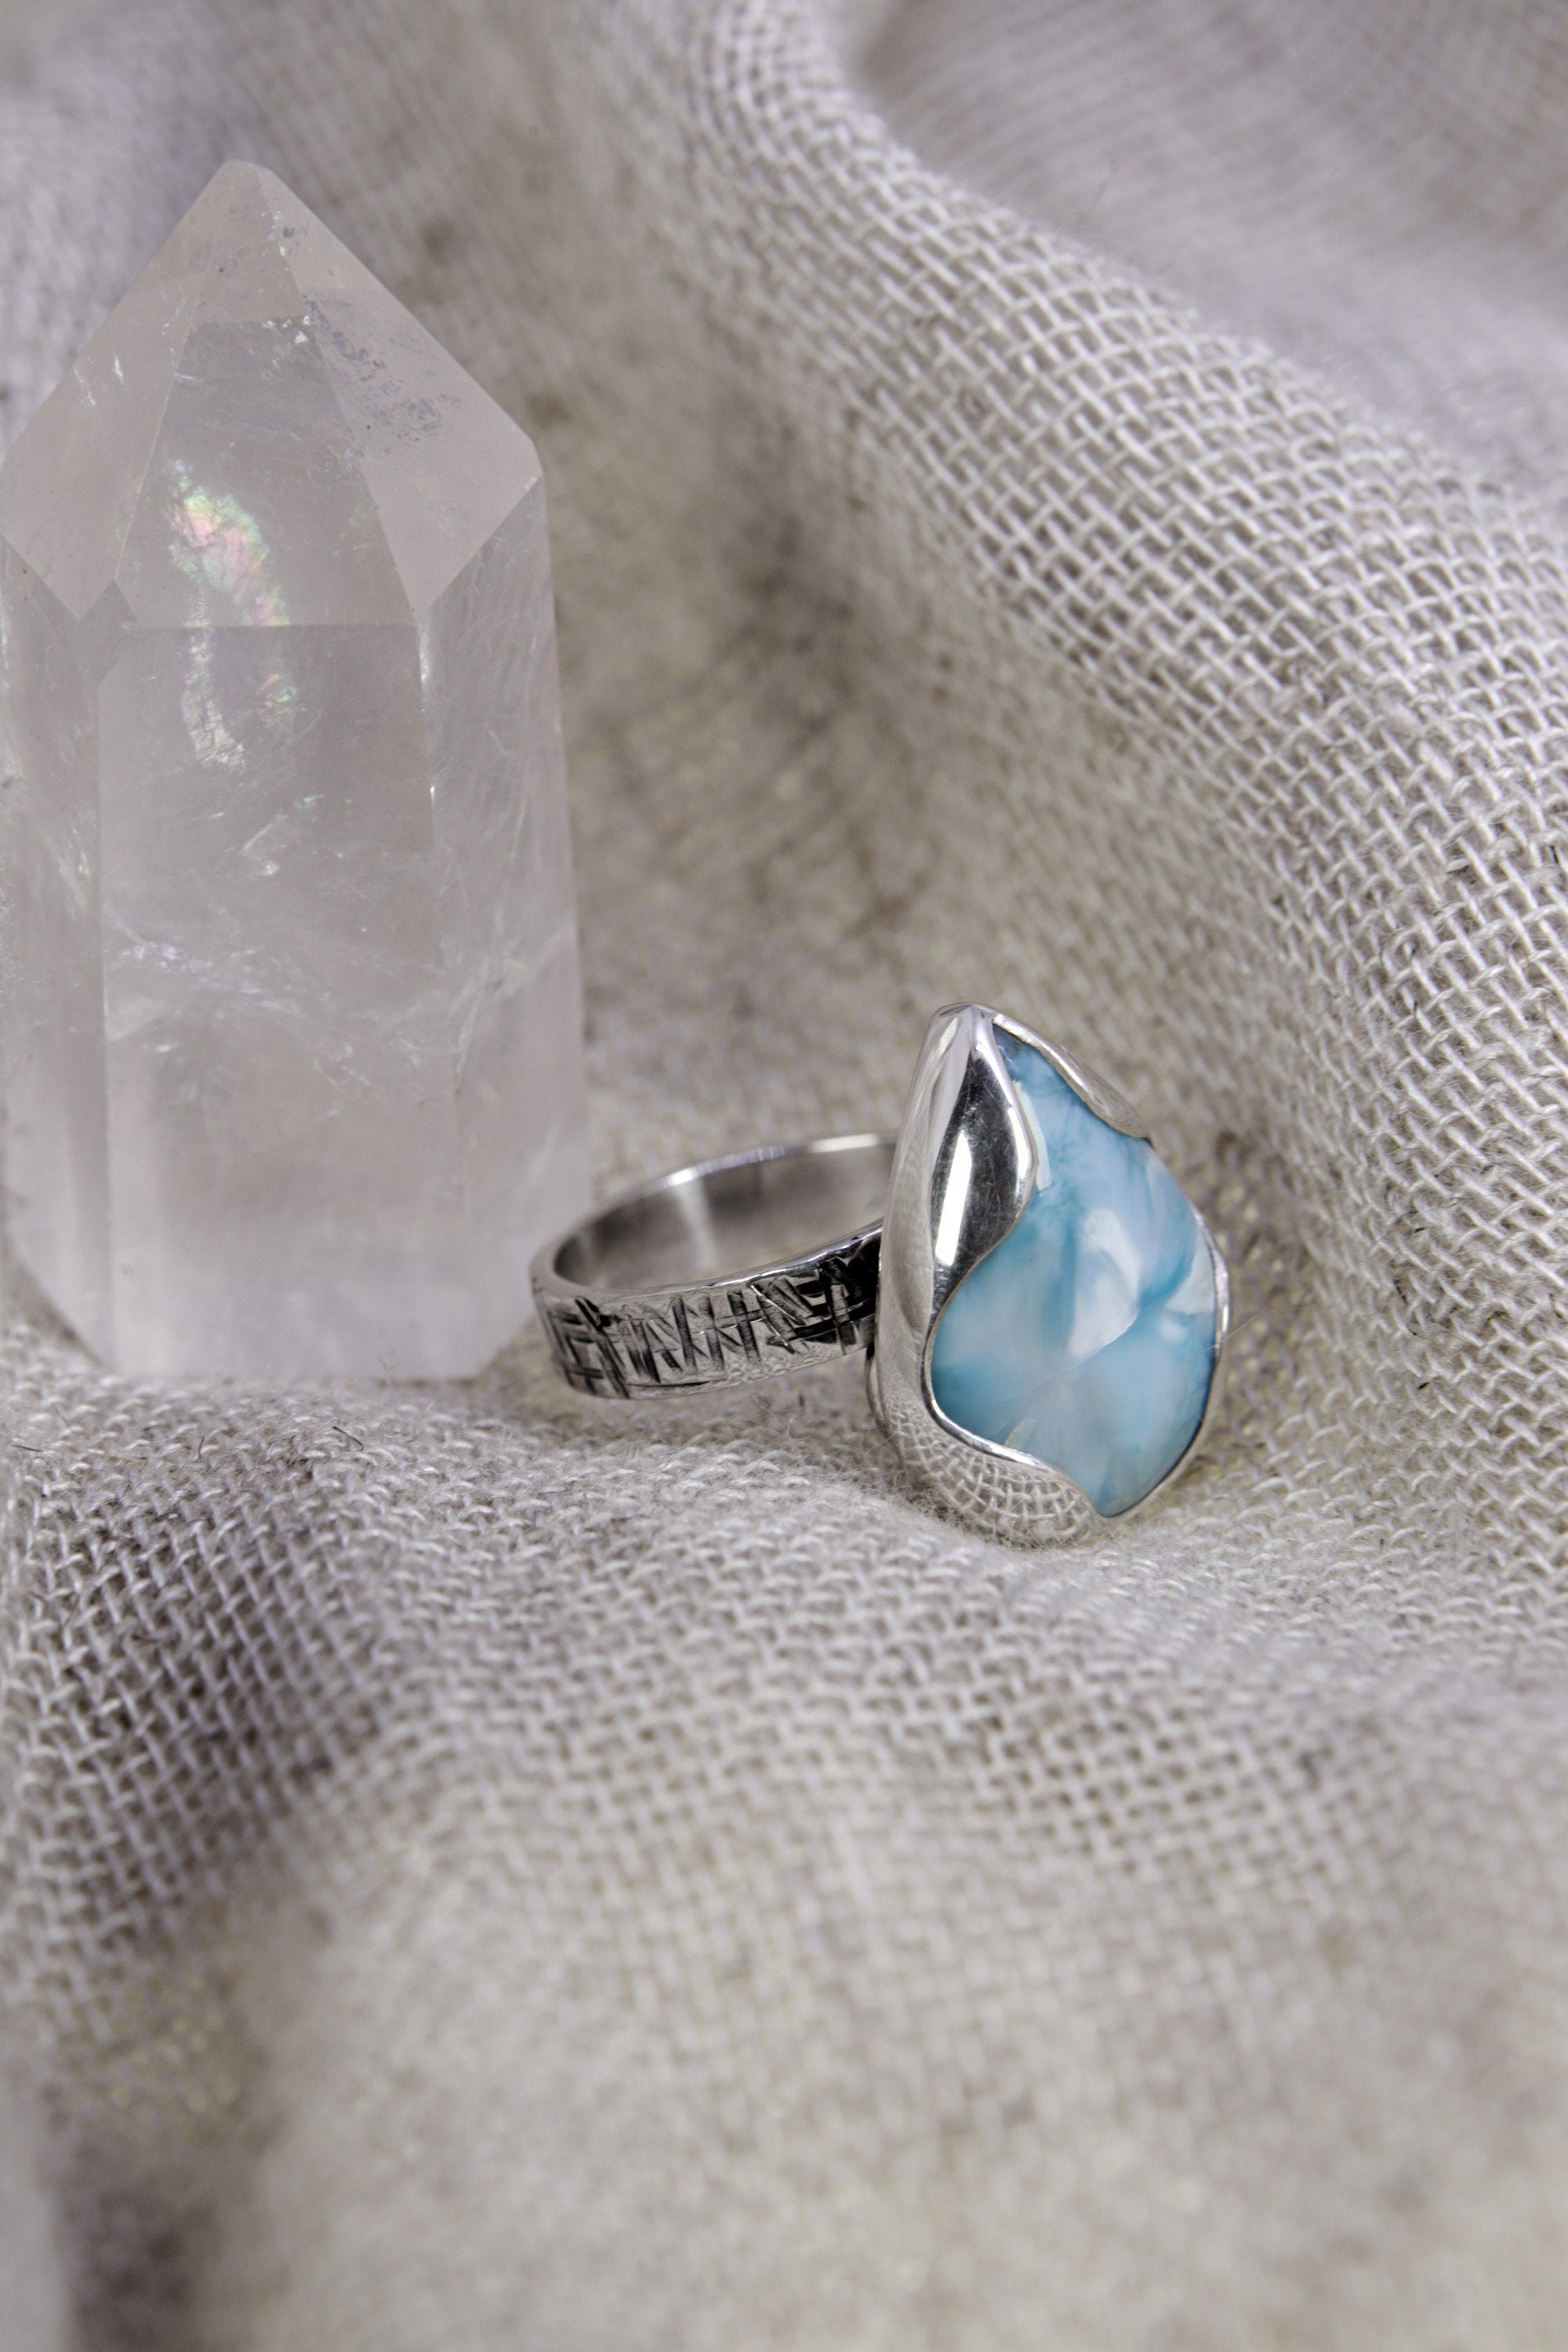 Ocean's Embrace: Adjustable Sterling Silver Ring with Teardrop Larimar - Unisex - Size 5-12 US